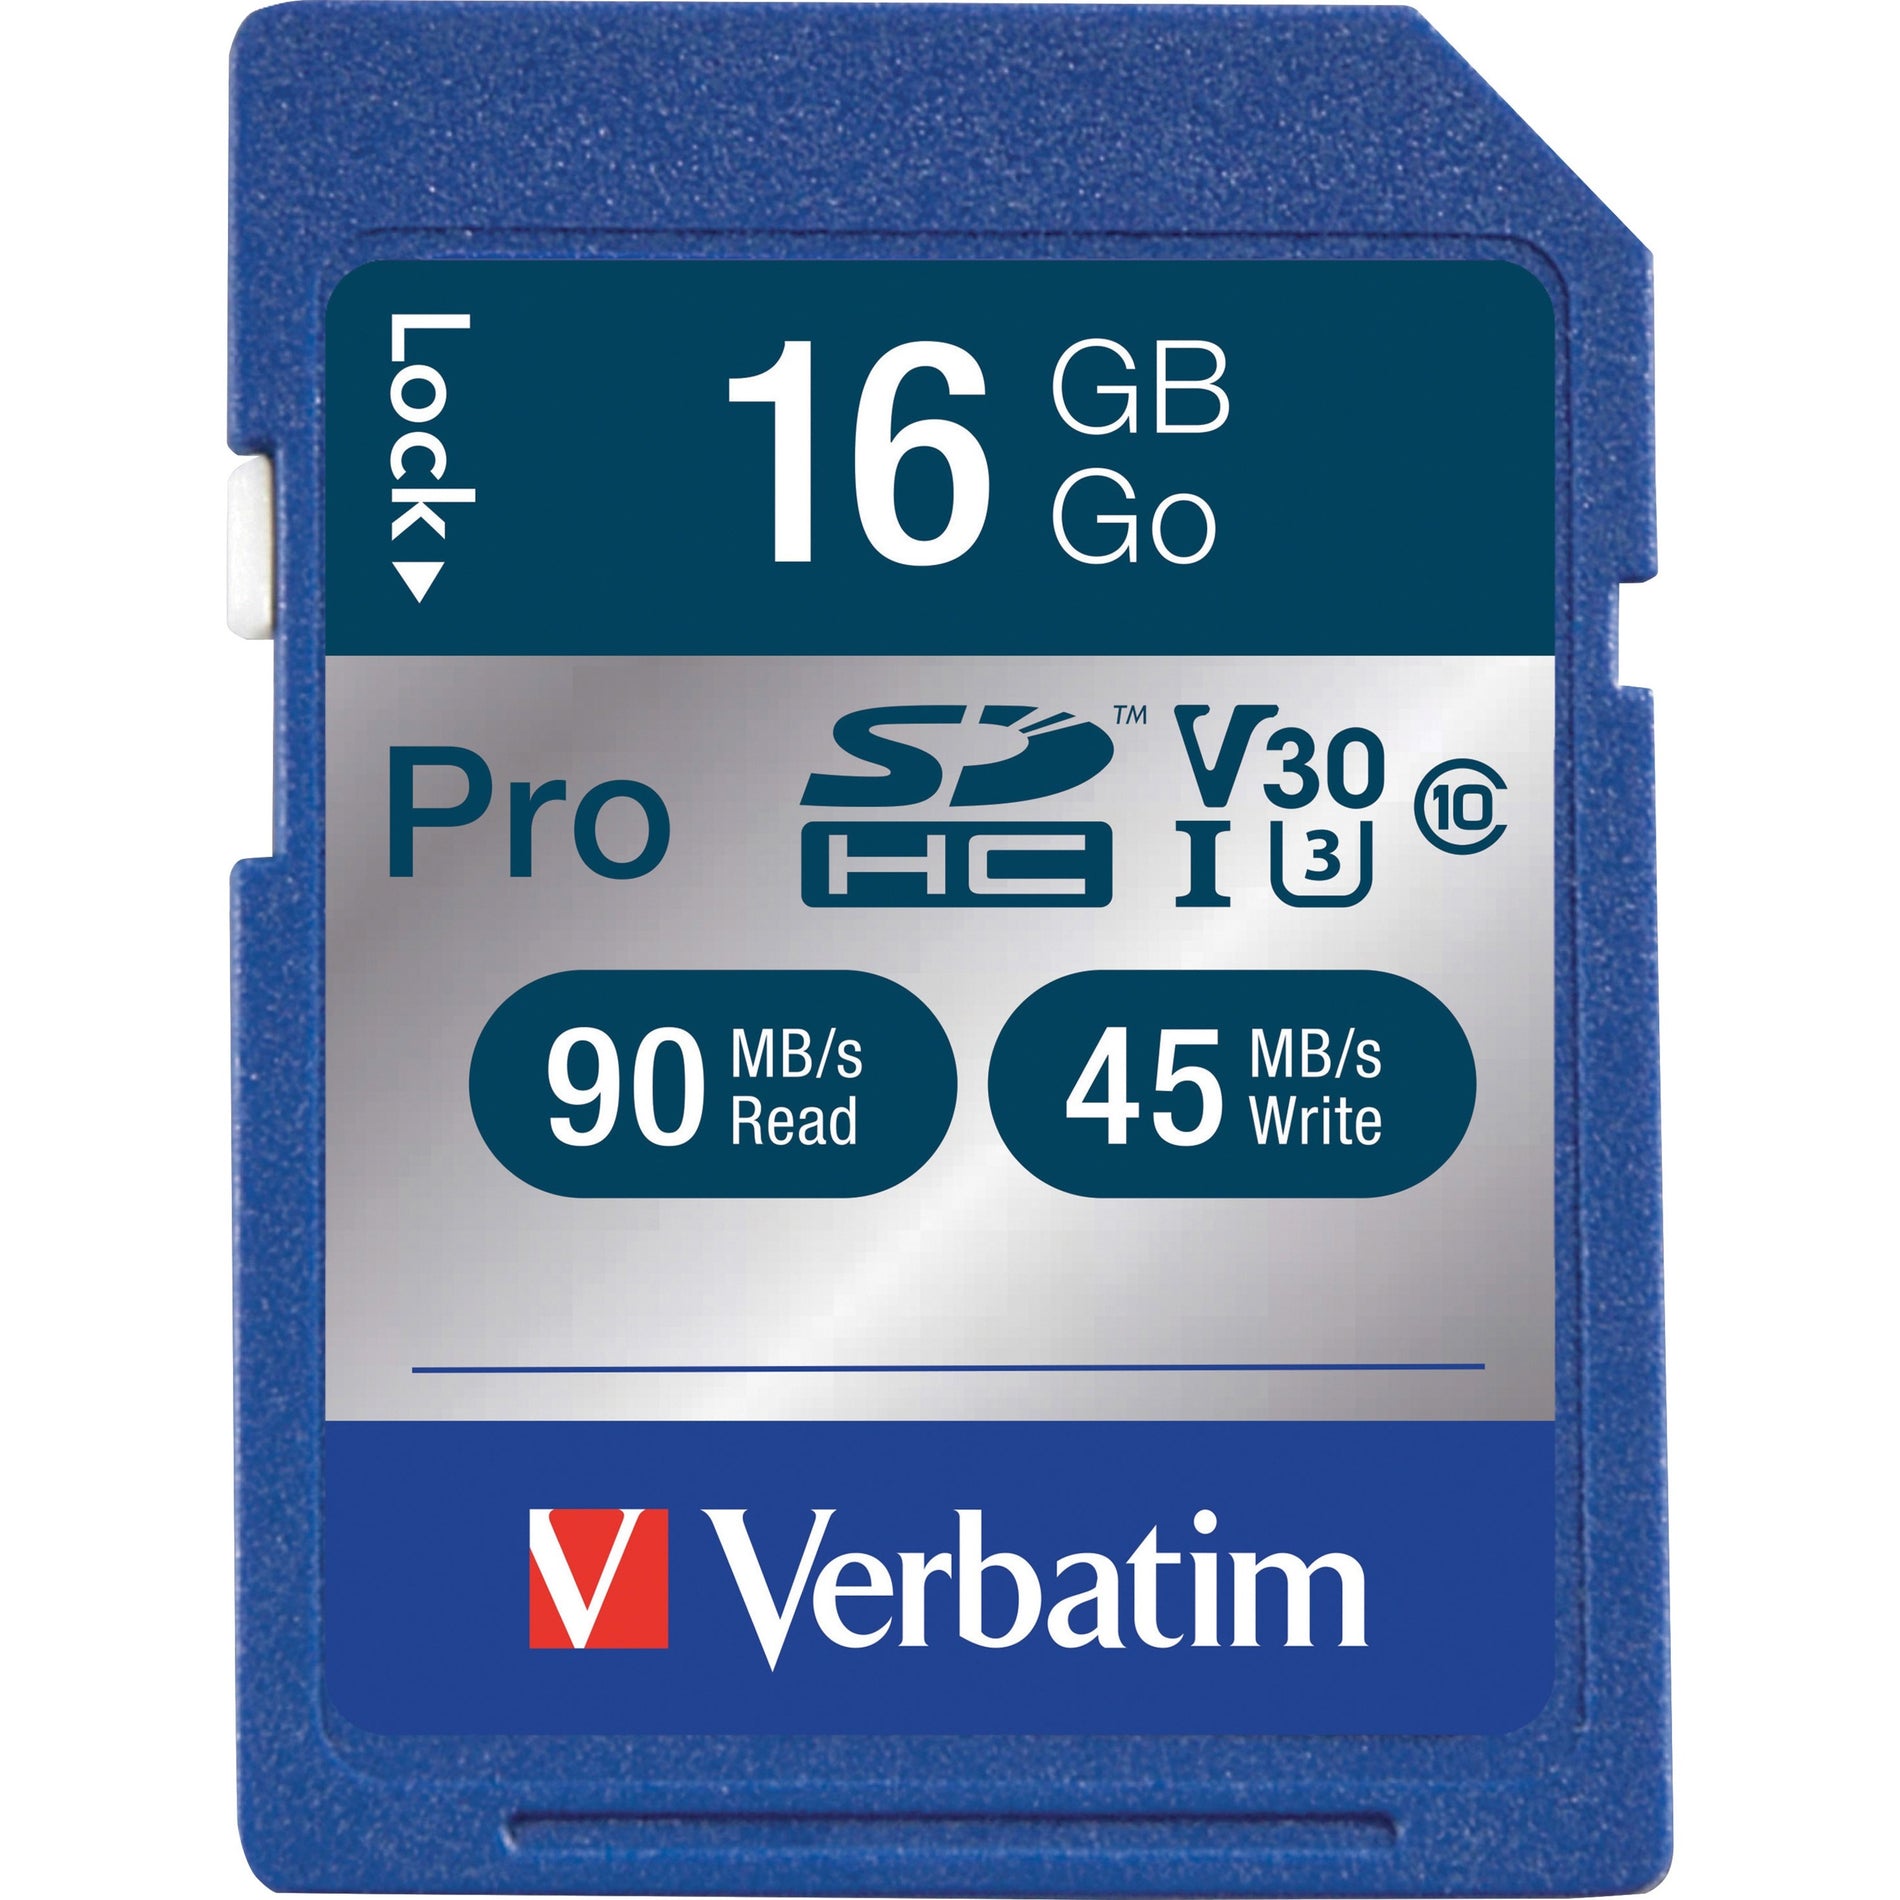 Verbatim 98046 16GB Pro 600X SDHC Memory Card, UHS-I V30 U3 Class 10, Shock Proof, Water Resistant